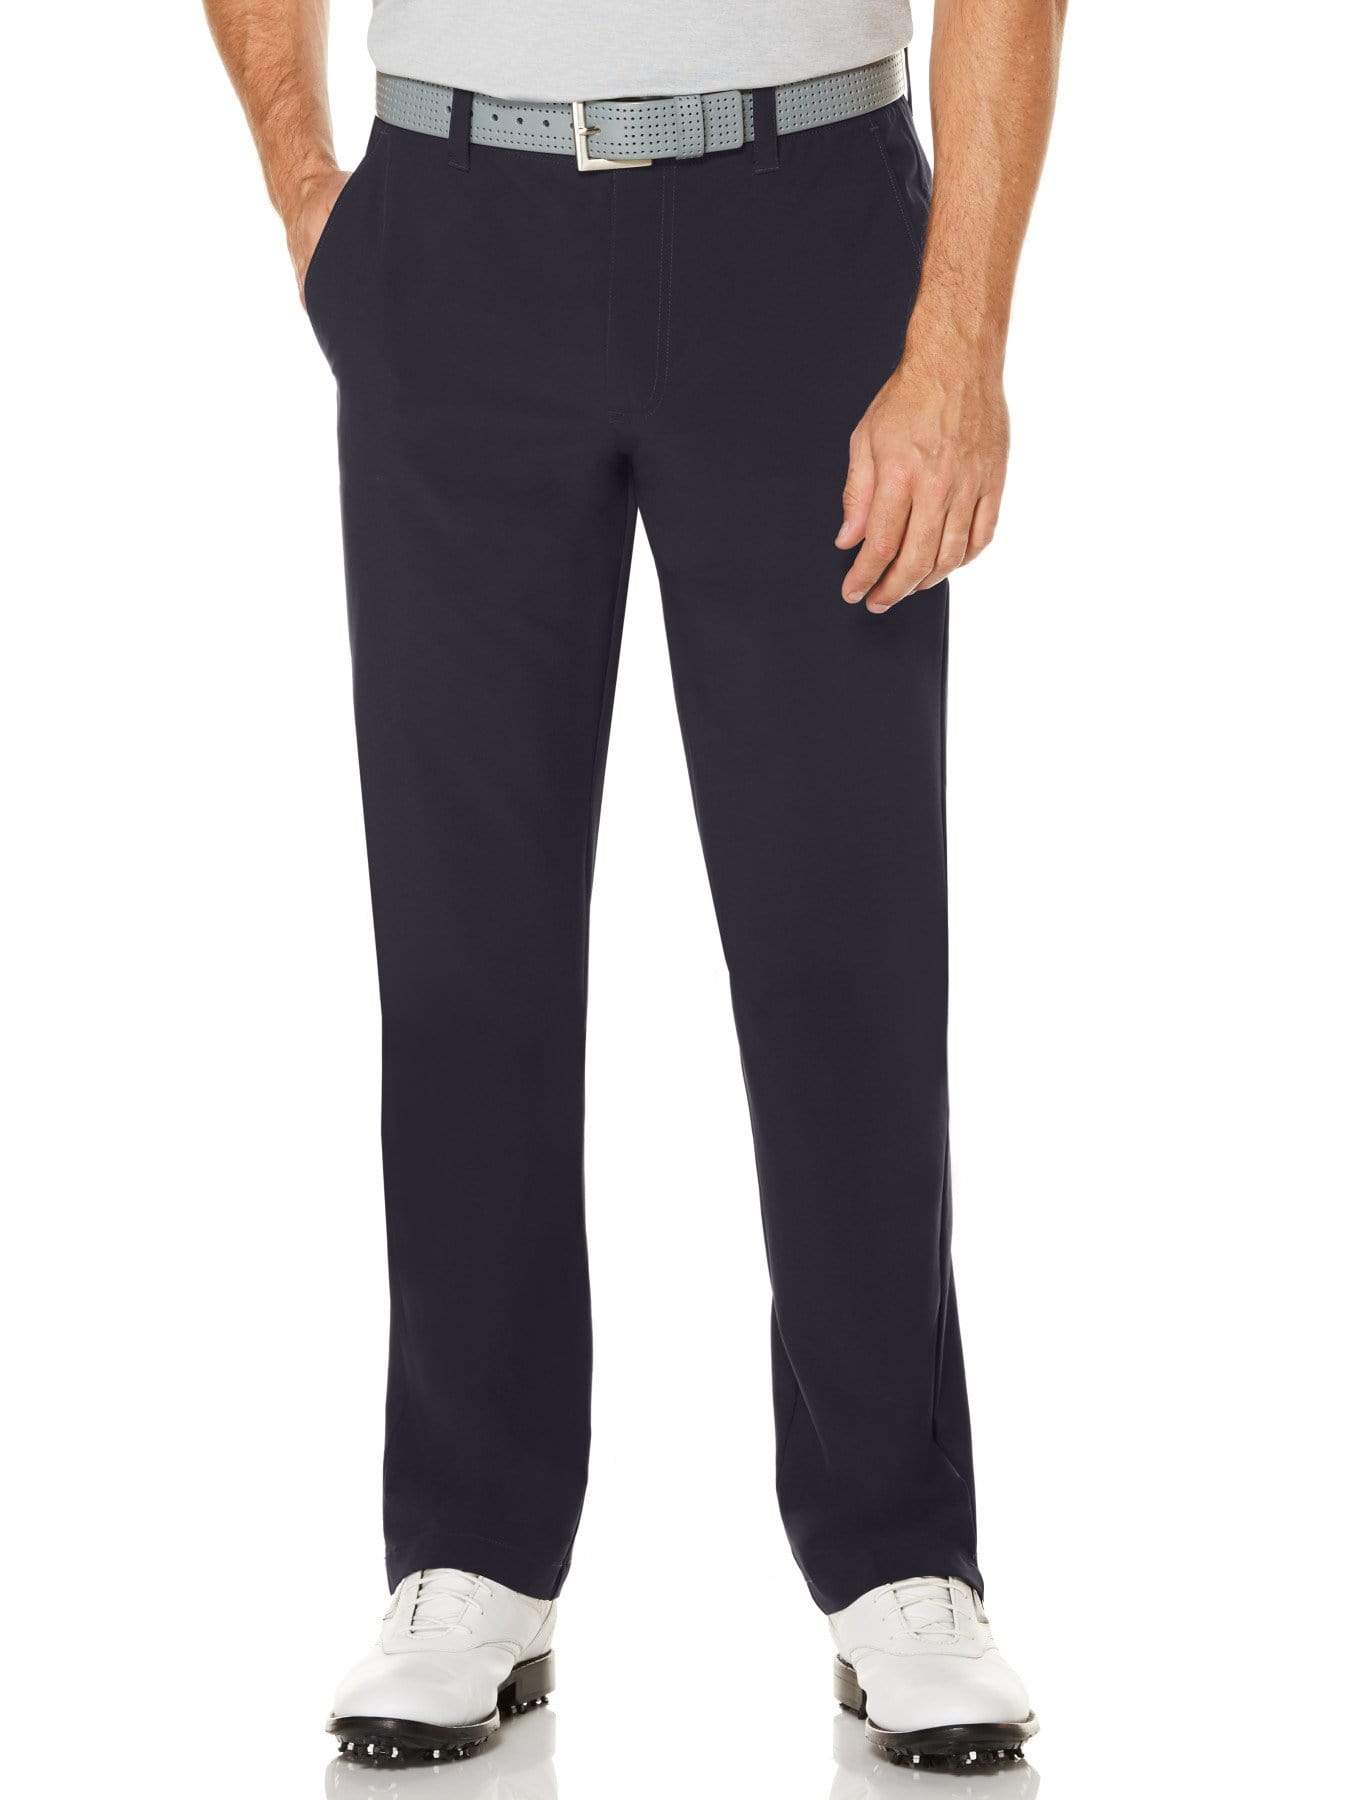 Callaway Apparel Mens Lightweight Stretch Tech Pants w/ Active Waistband, Size 30 x 32, Night Sky Blue, Polyester/Elastane | Golf Apparel Shop